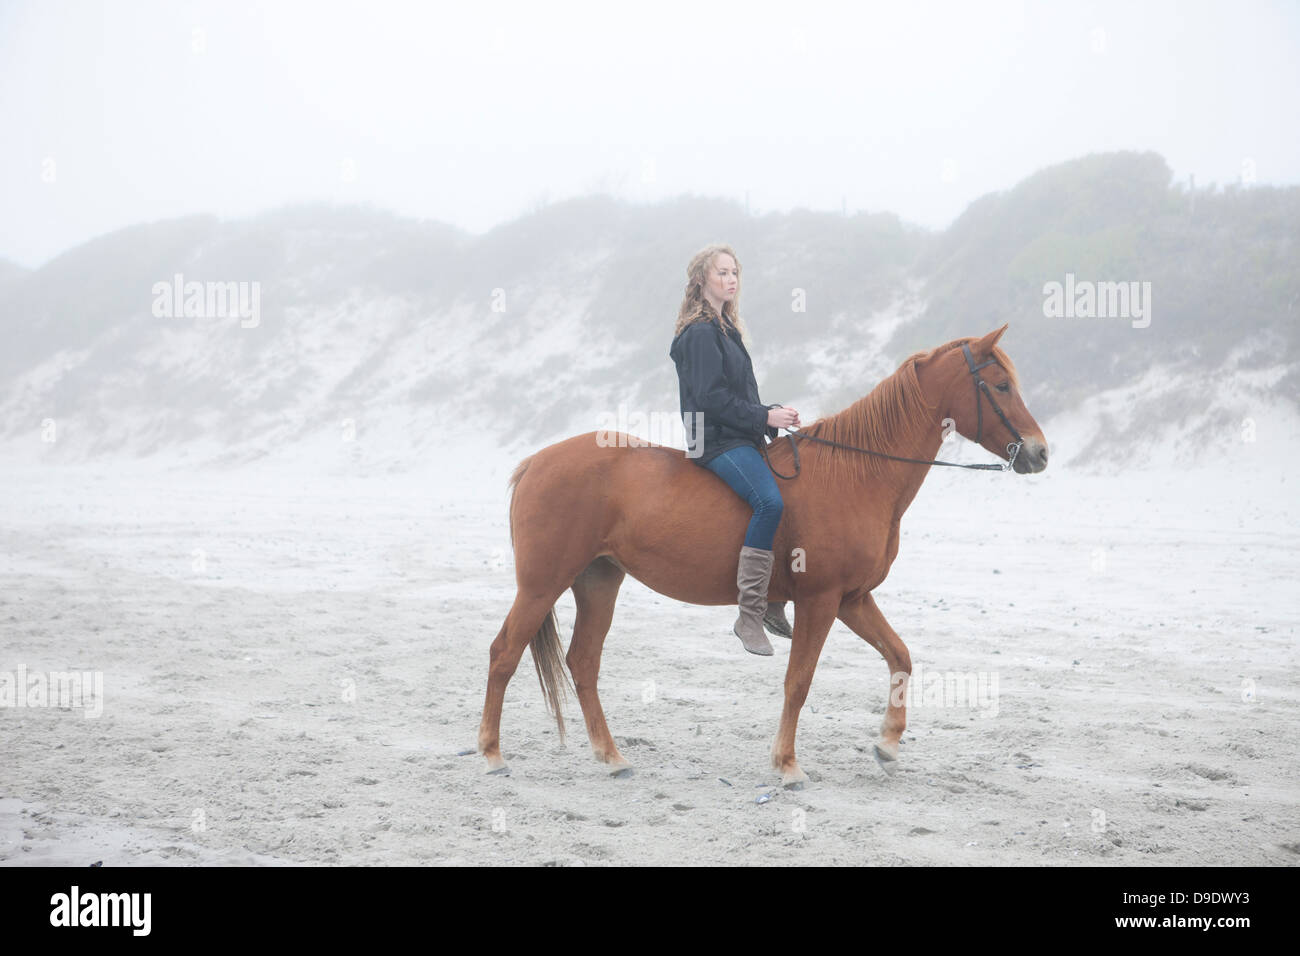 Woman riding horse on beach Stock Photo